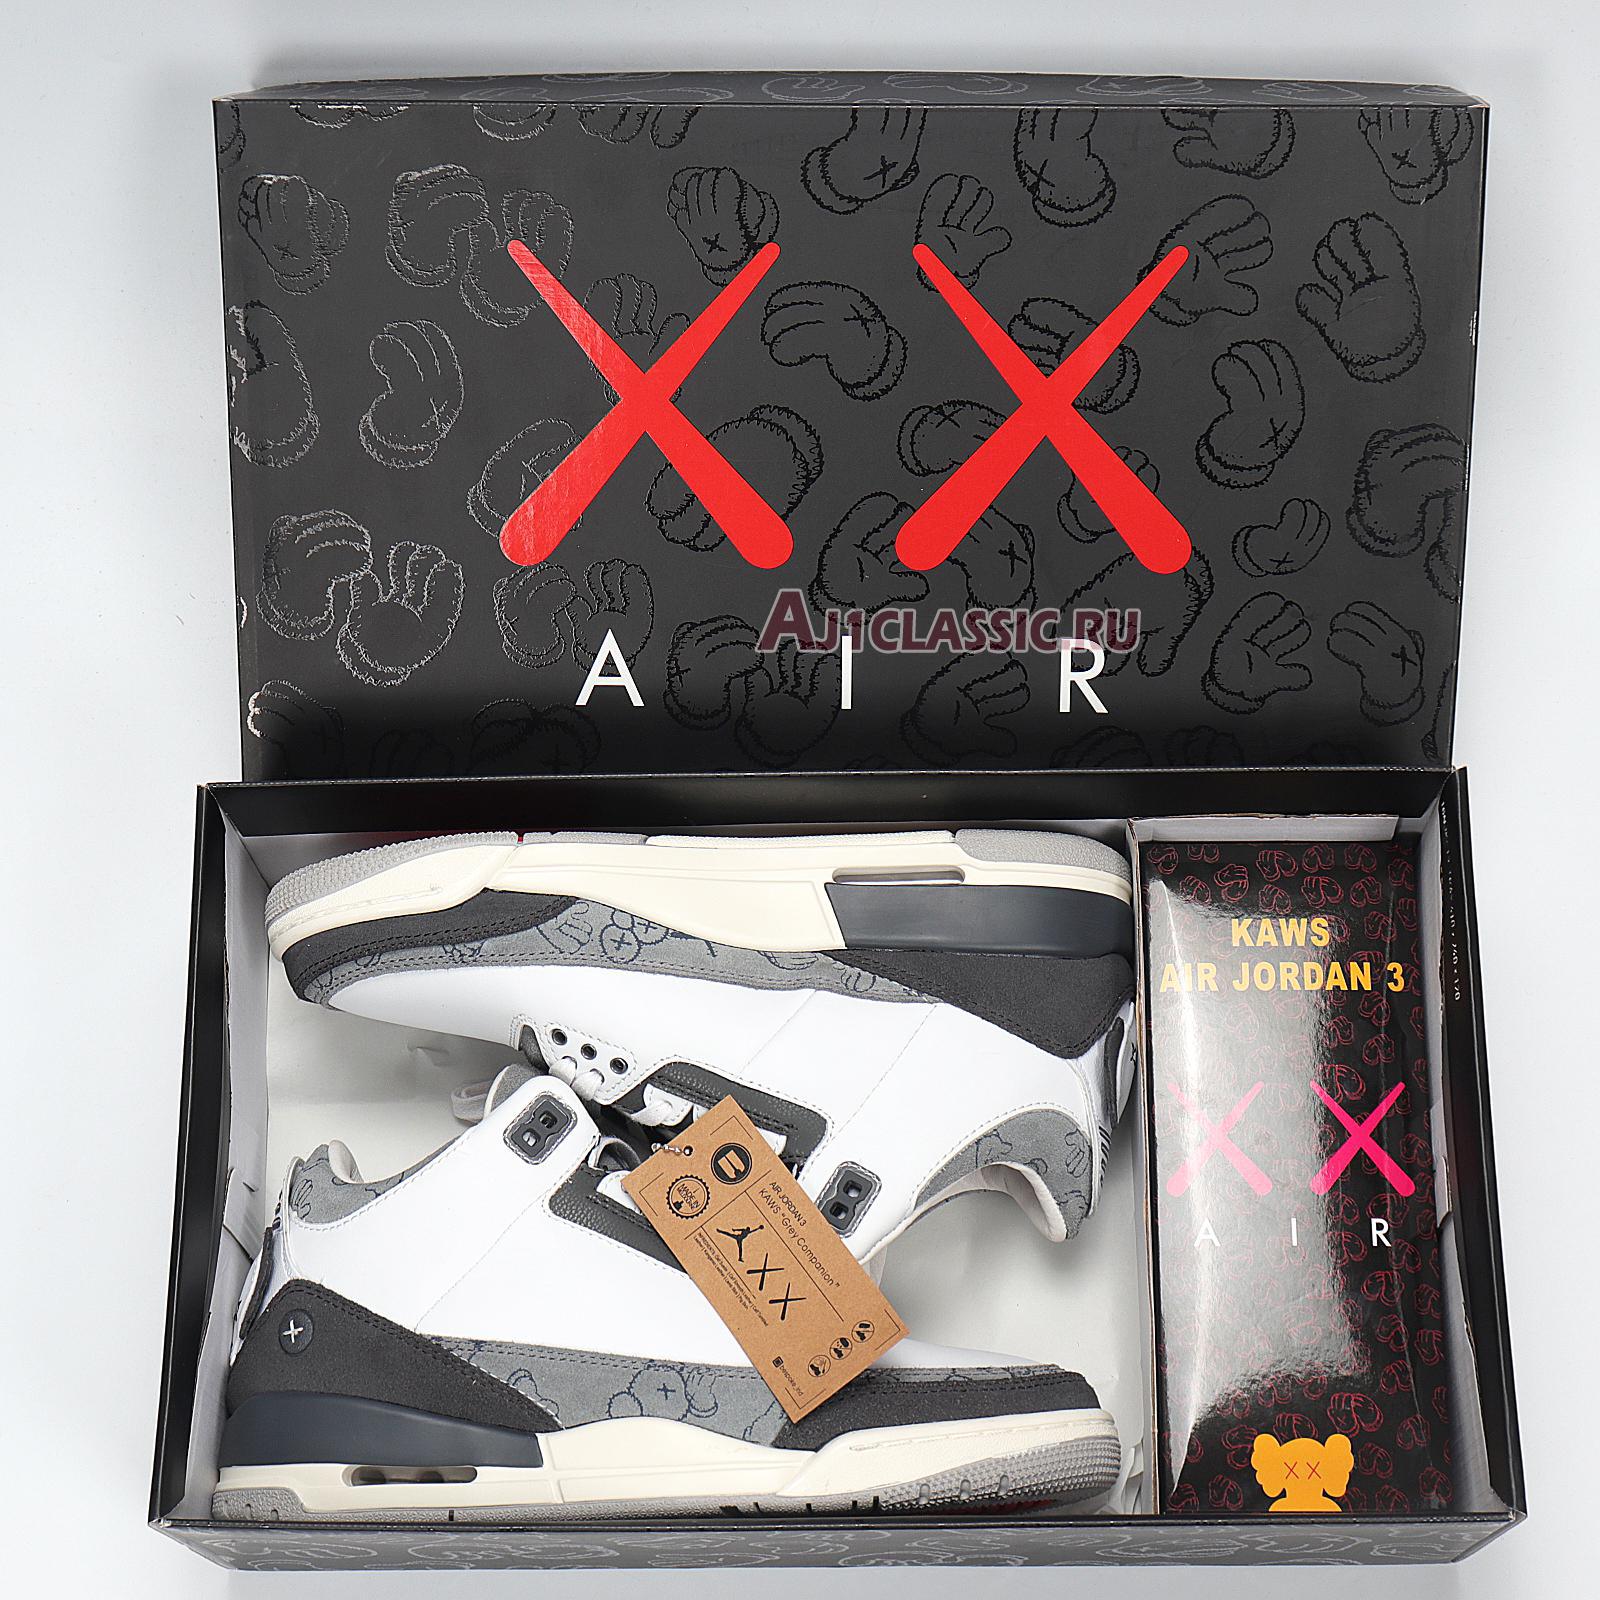 BespokeIND x Air Jordan 3 "Kaws" AJ3-BespokeIND